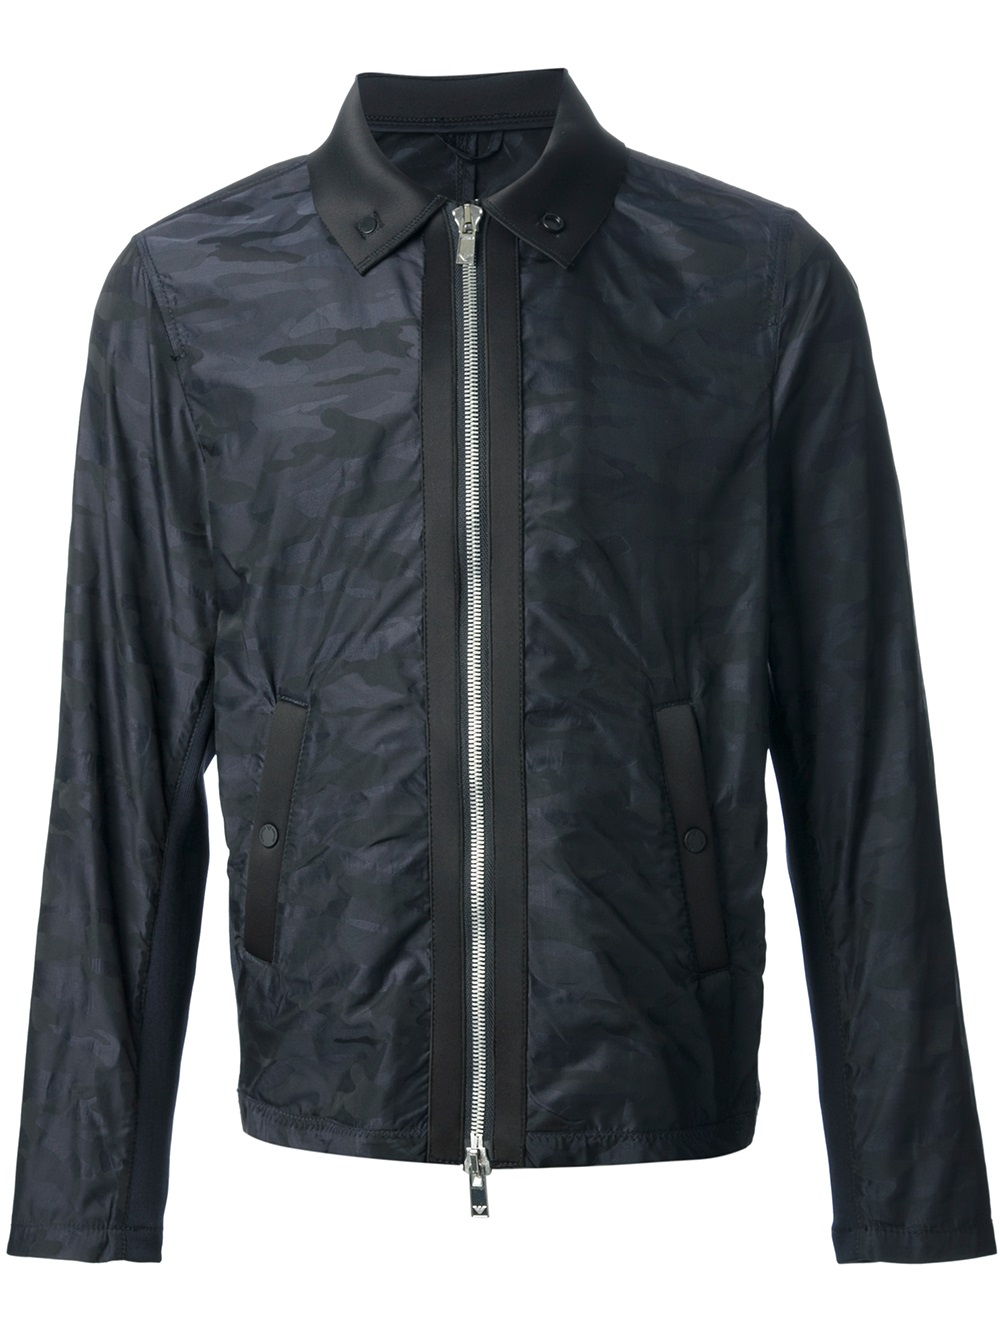 [QC] Prada lightweight jacket, emporio armani camo jacket : r/FashionReps